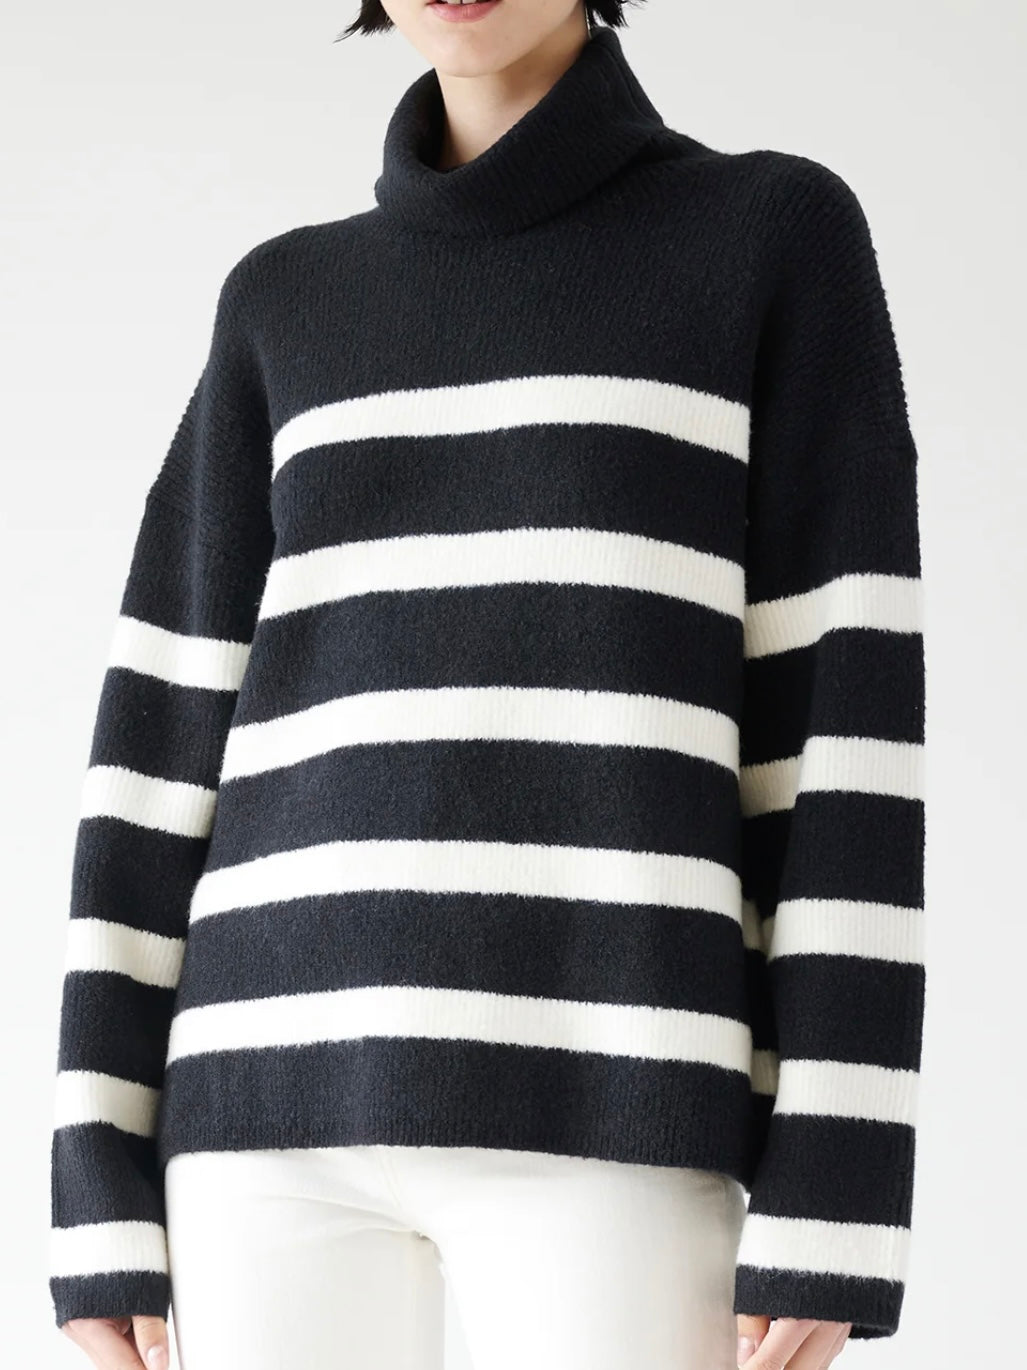 Velvet Encino Sweater in Black/Milk